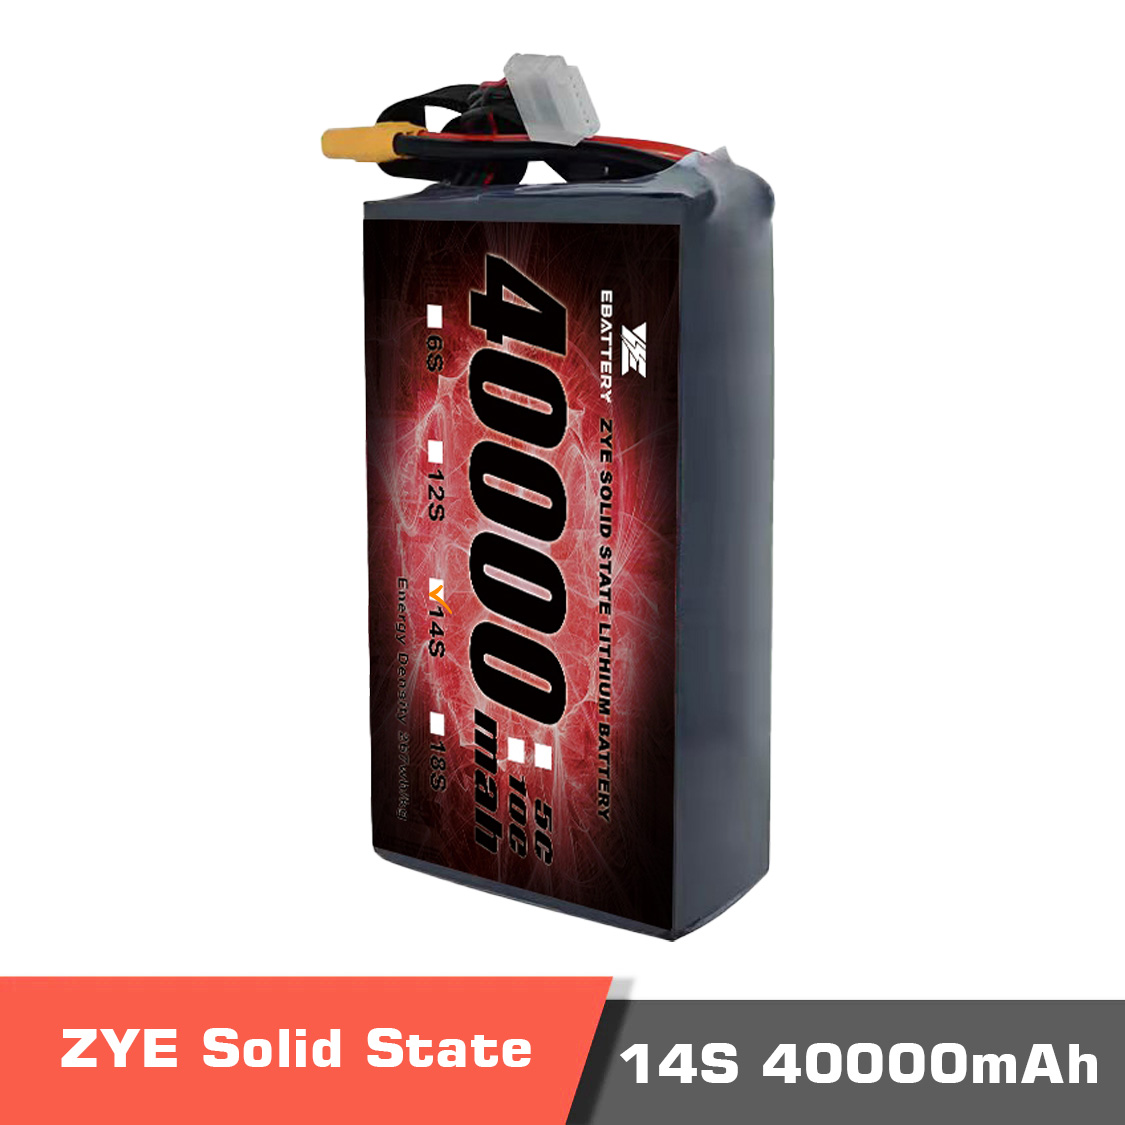 temp40000 14s1 - ZYE Power Ultra HV Semi Solid-State Battery,Ultra HV Semi Solid-State Battery,18S 40000mAh high voltage LiPo Battery,18S 40000mAh HV LiPo Battery,Solid-state LiPo battery,lipo battery,drone battery,14s battery,high energy density battery,UAV,drone,vtol,ZYE Power,ZYE power Battery - MotioNew - 1